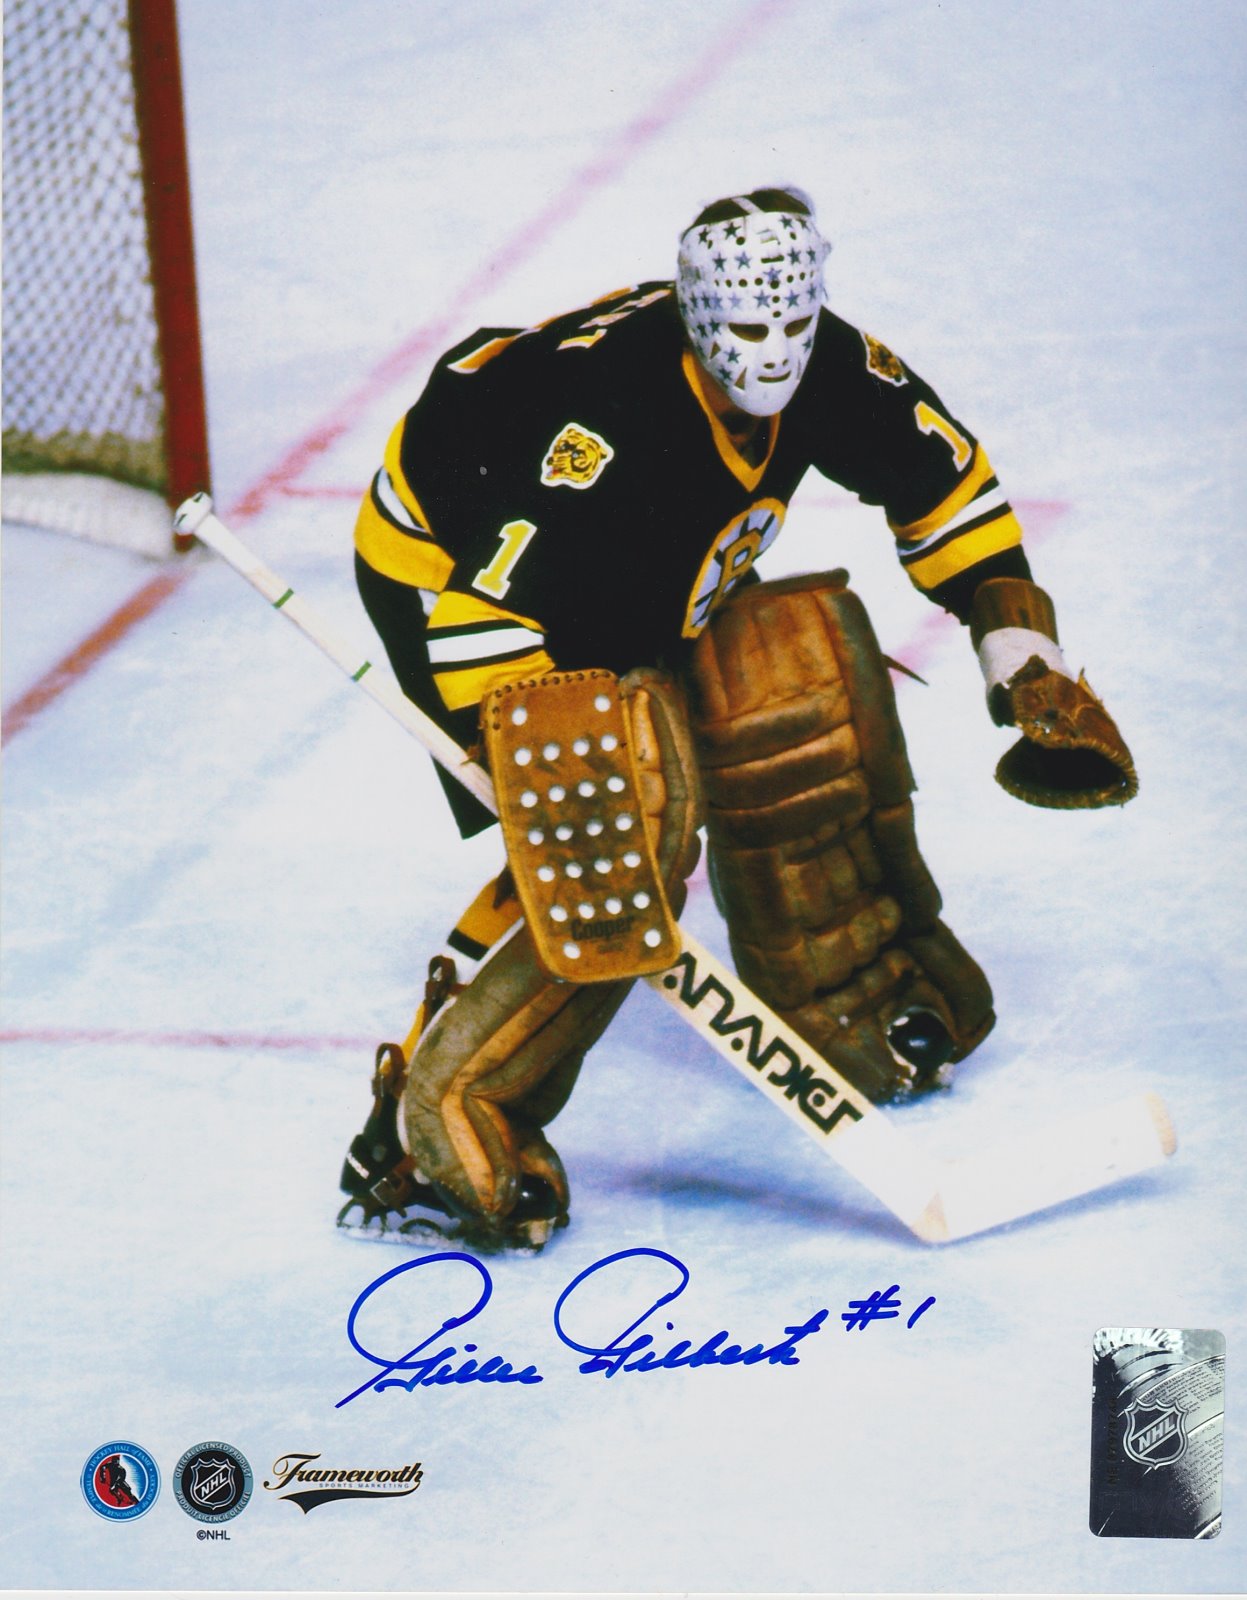 Gilles Gilbert Autograph 8x10 Color photo Boston Bruins